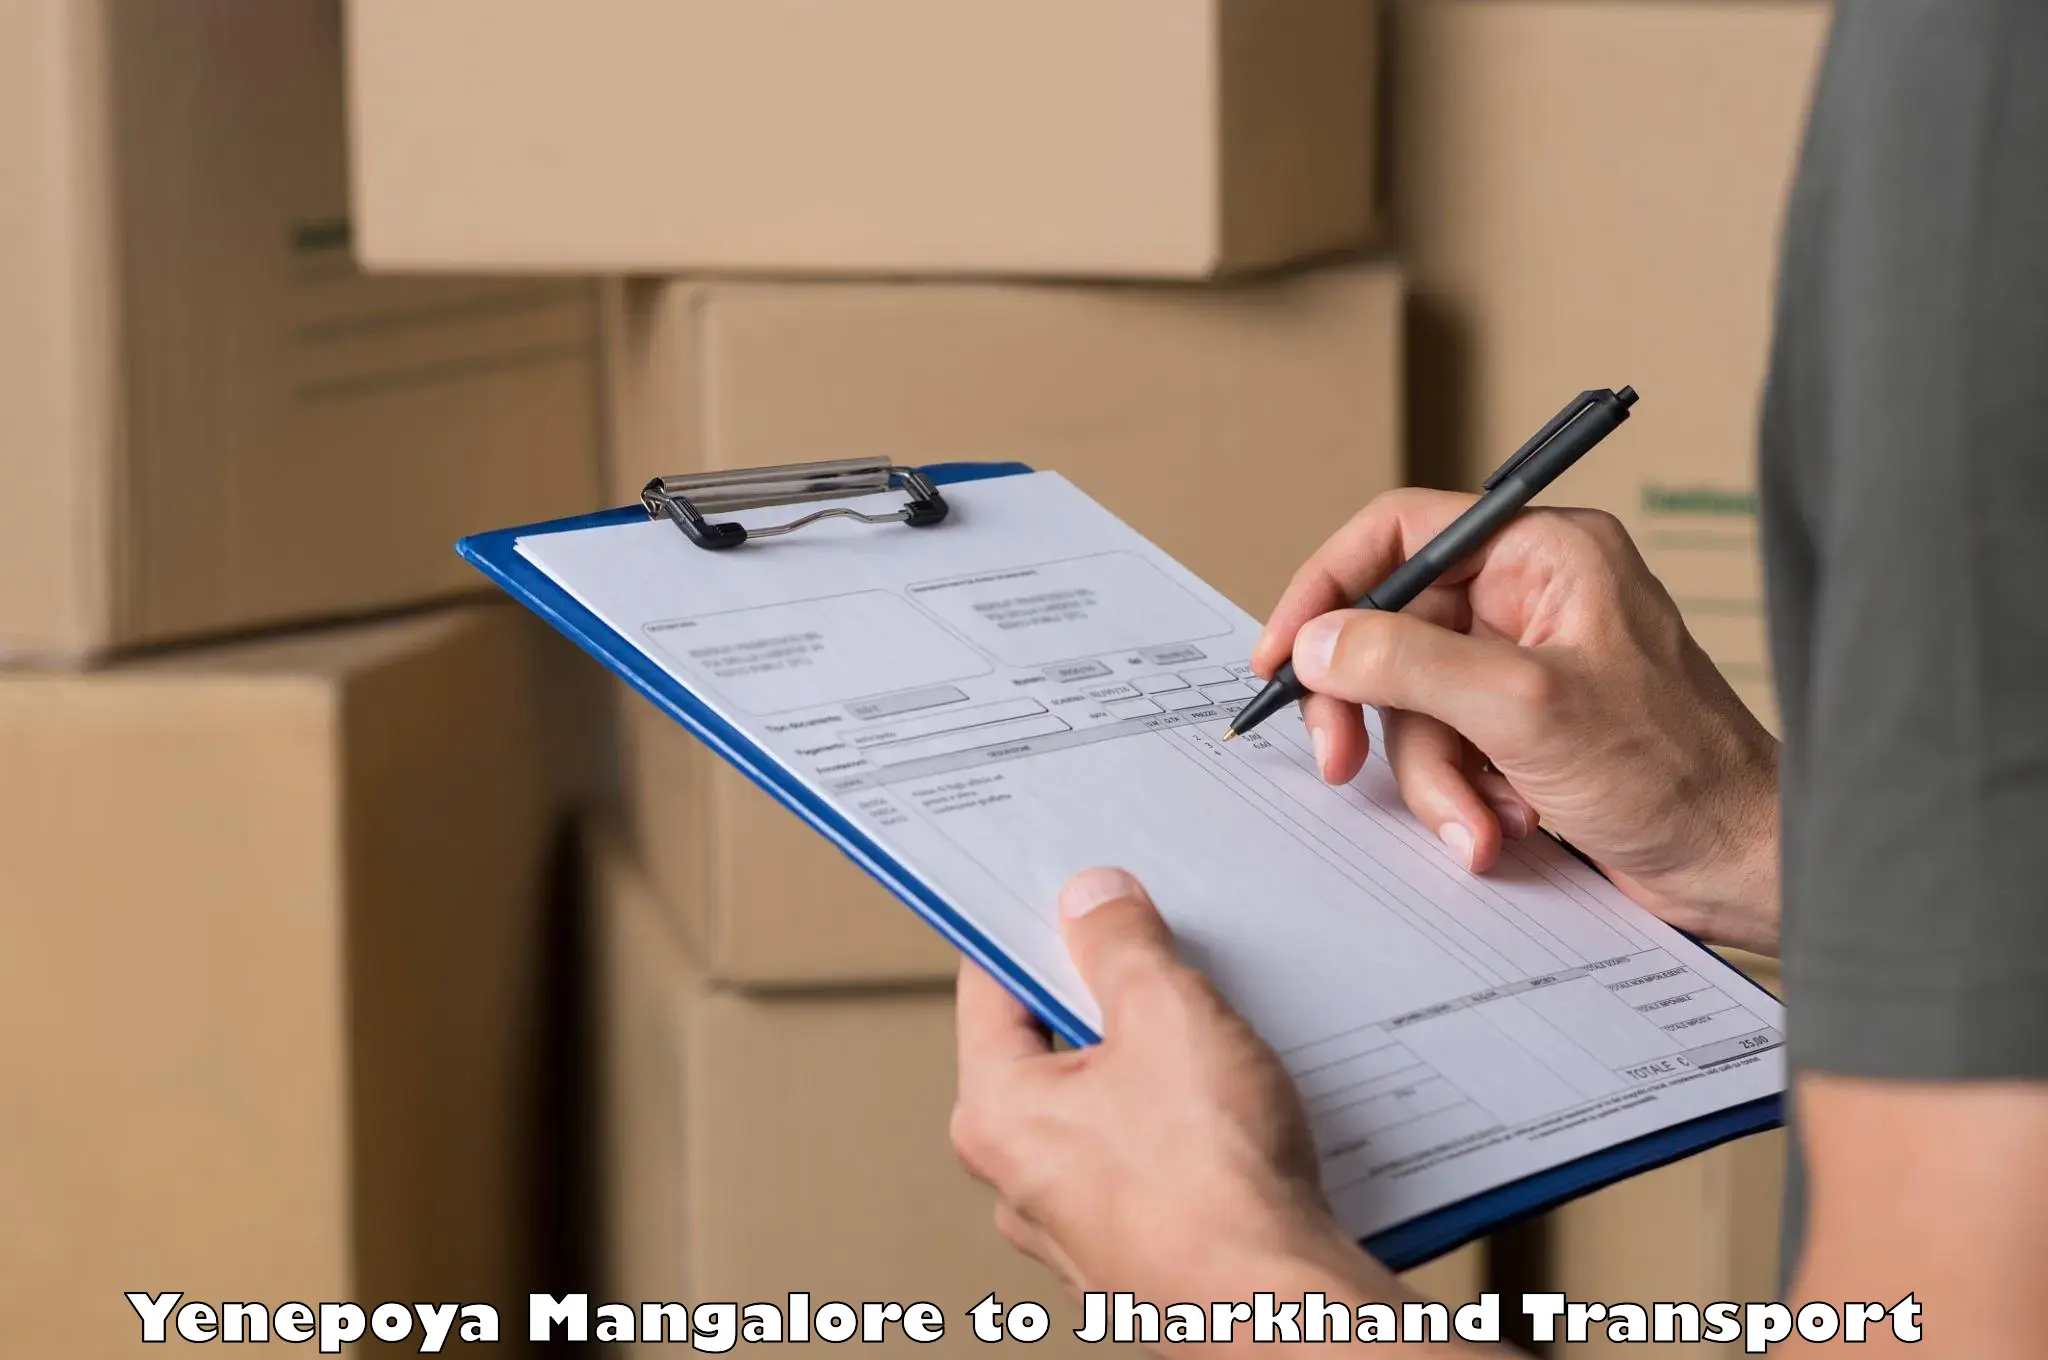 Goods delivery service Yenepoya Mangalore to IIT Dhanbad